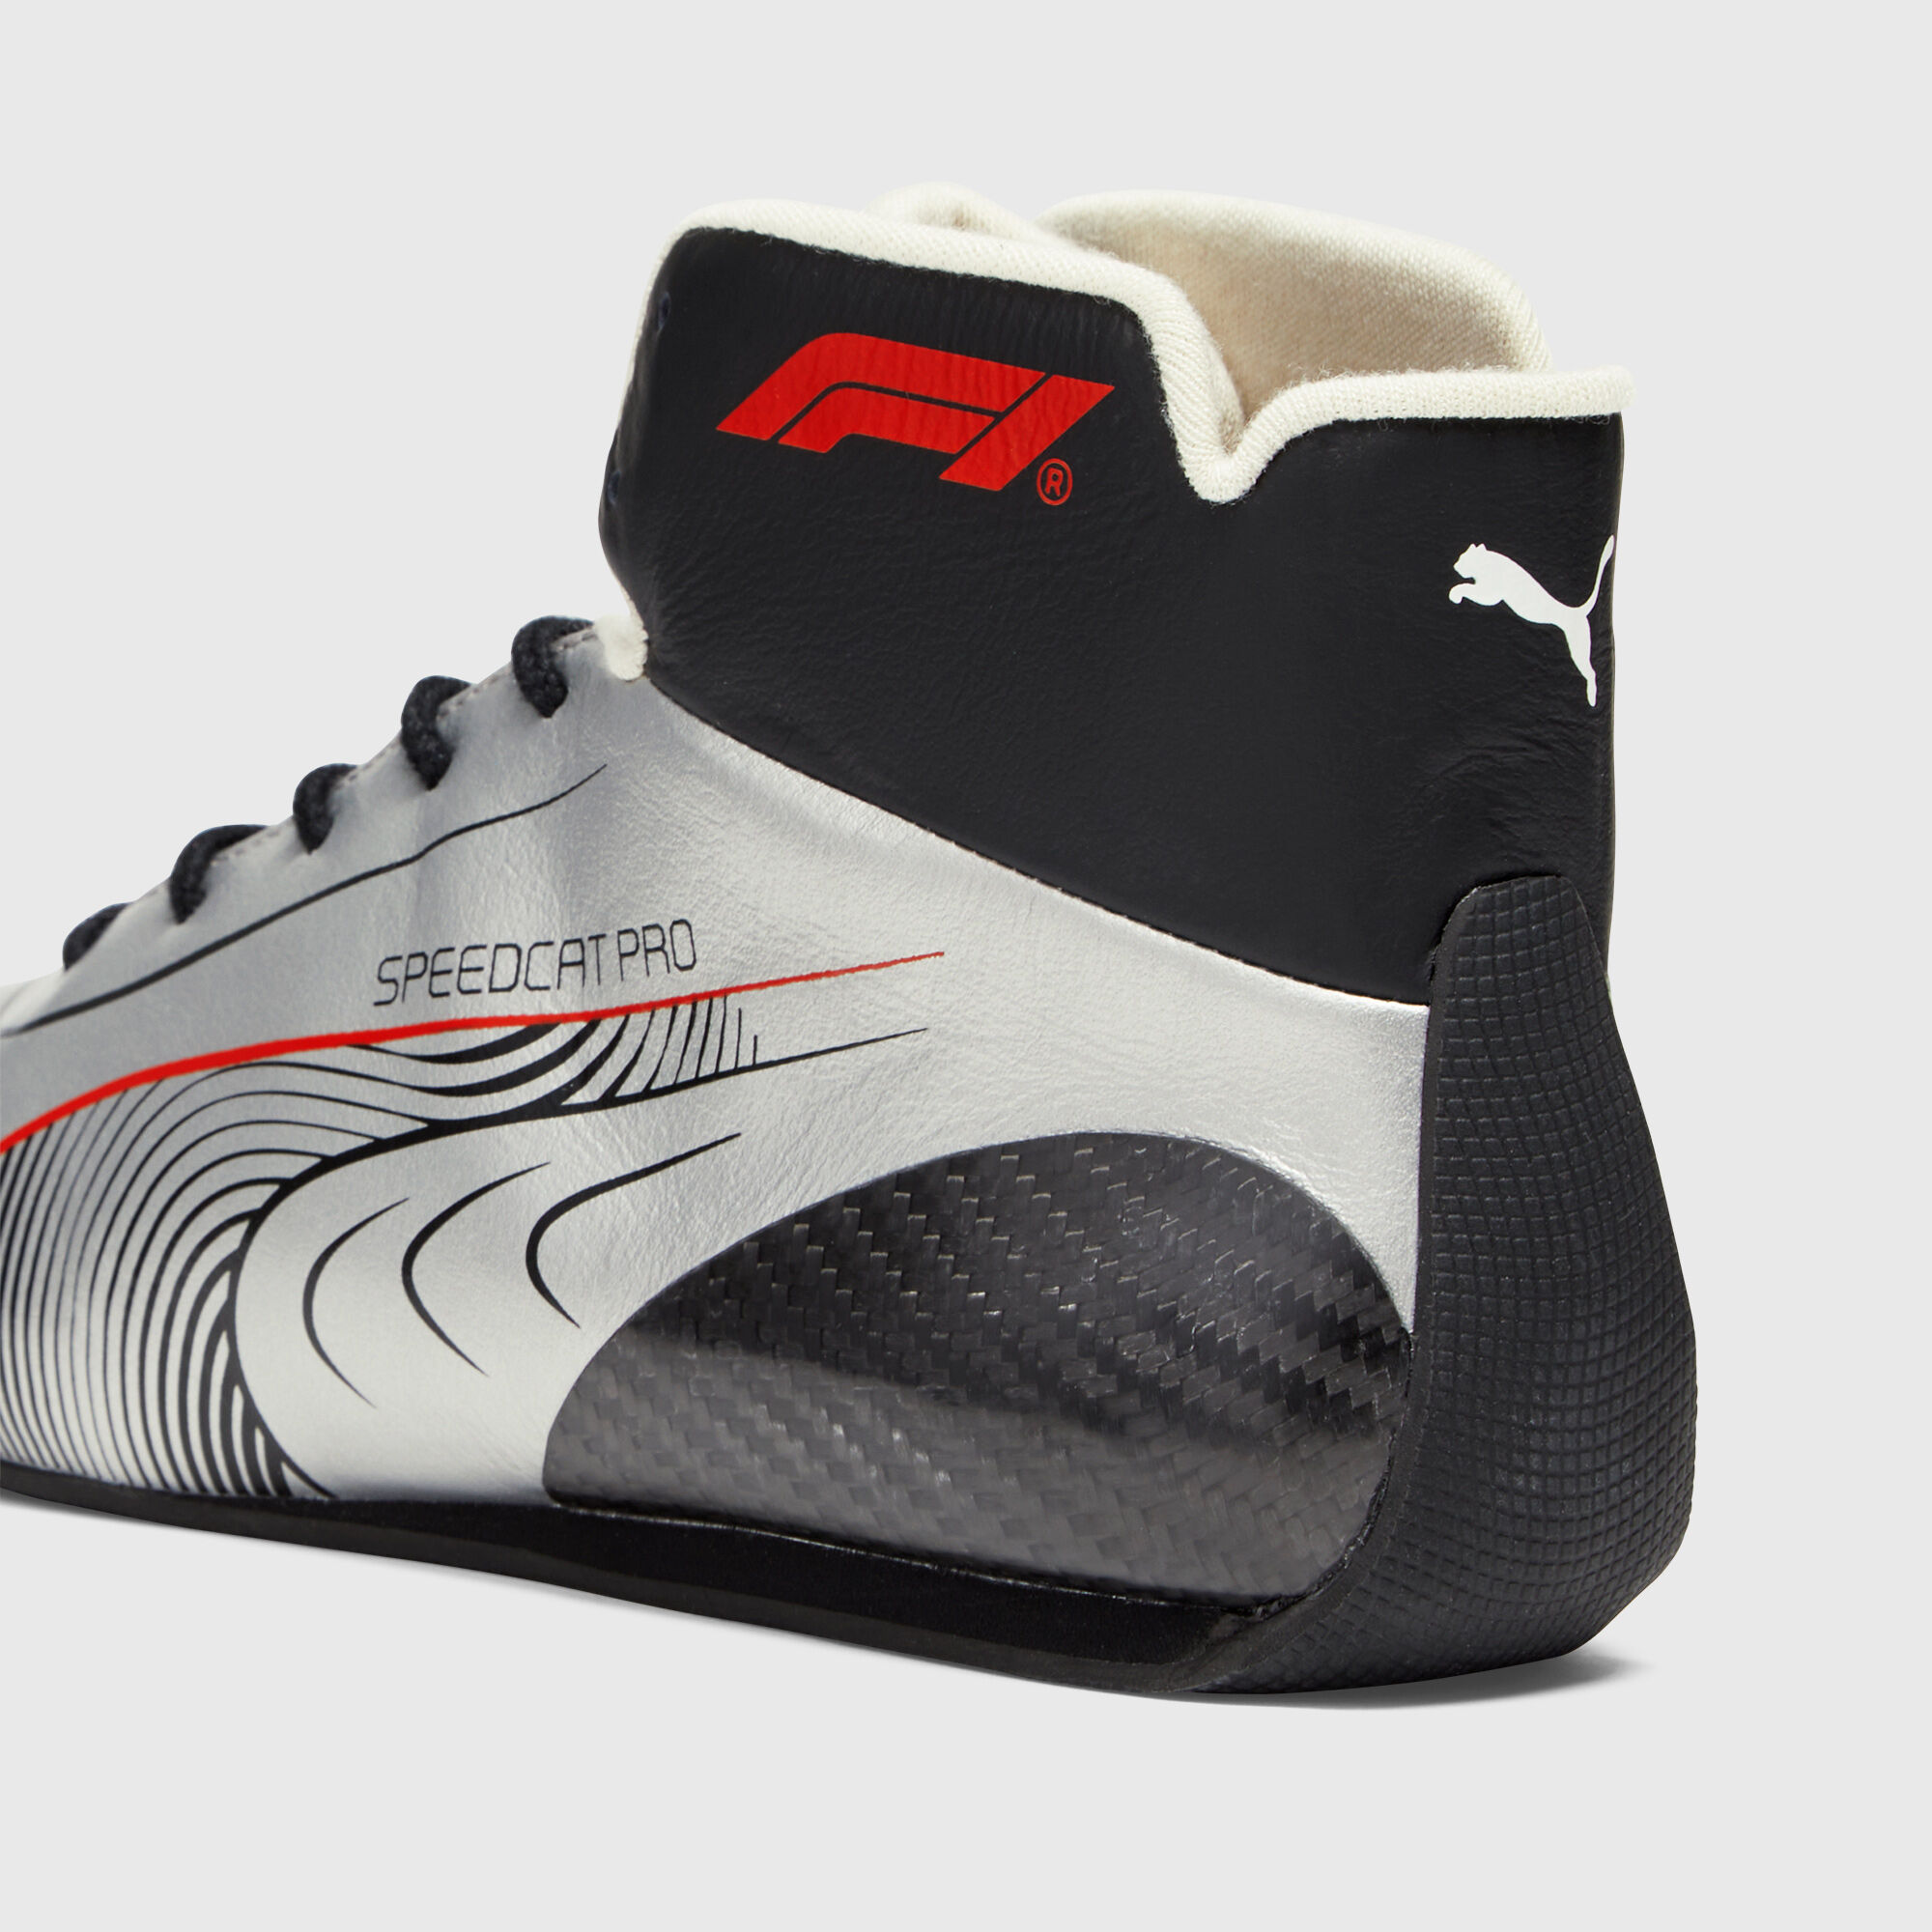 PUMA Speedcat Pro Sneakers Las Vegas GP Edition - F1 Collection ...